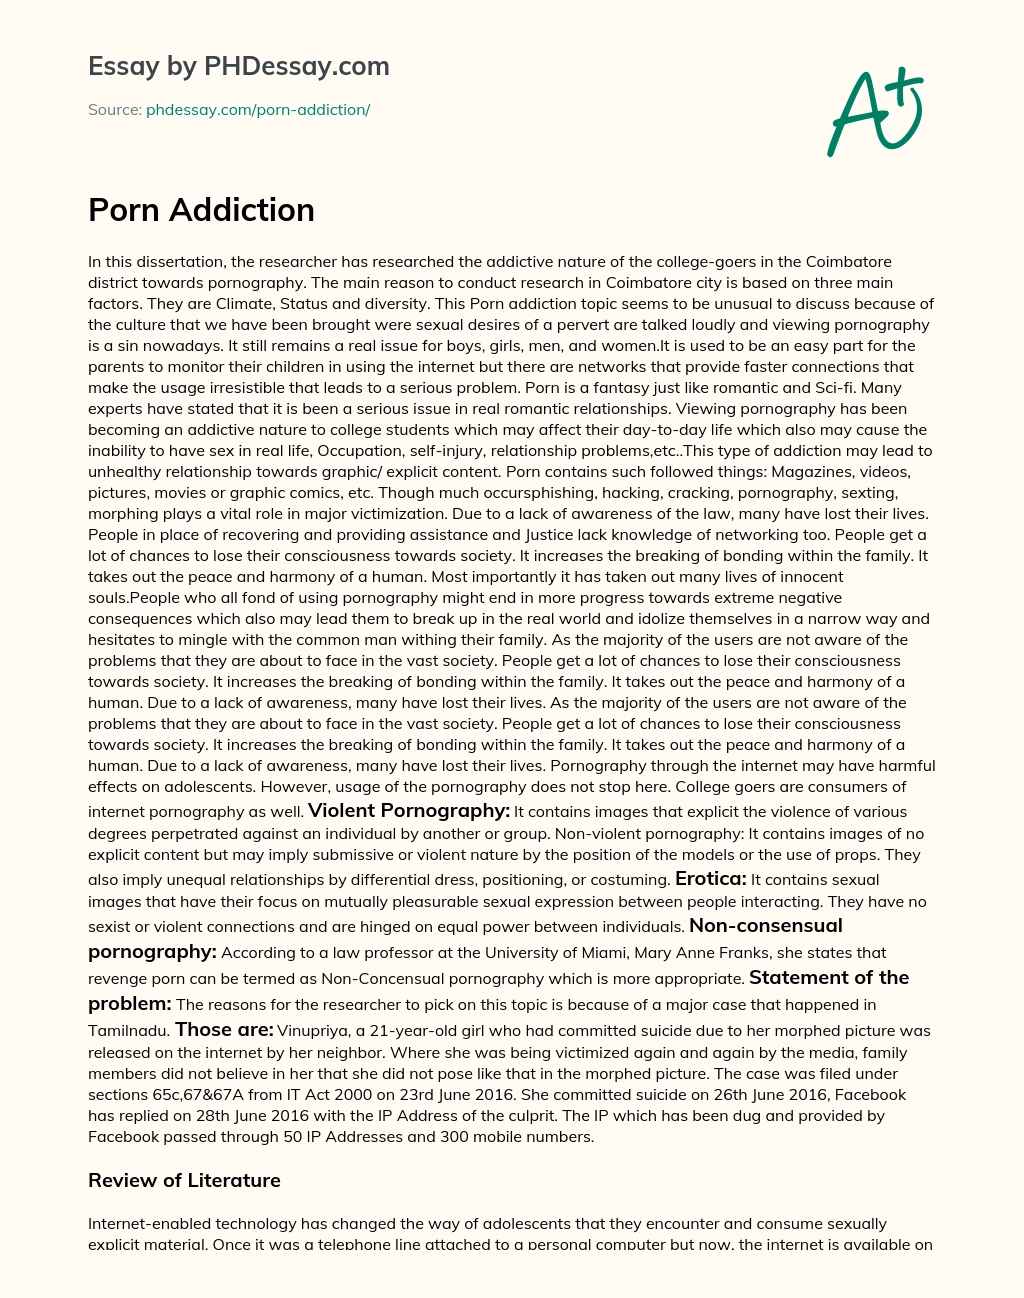 Porn Addiction essay